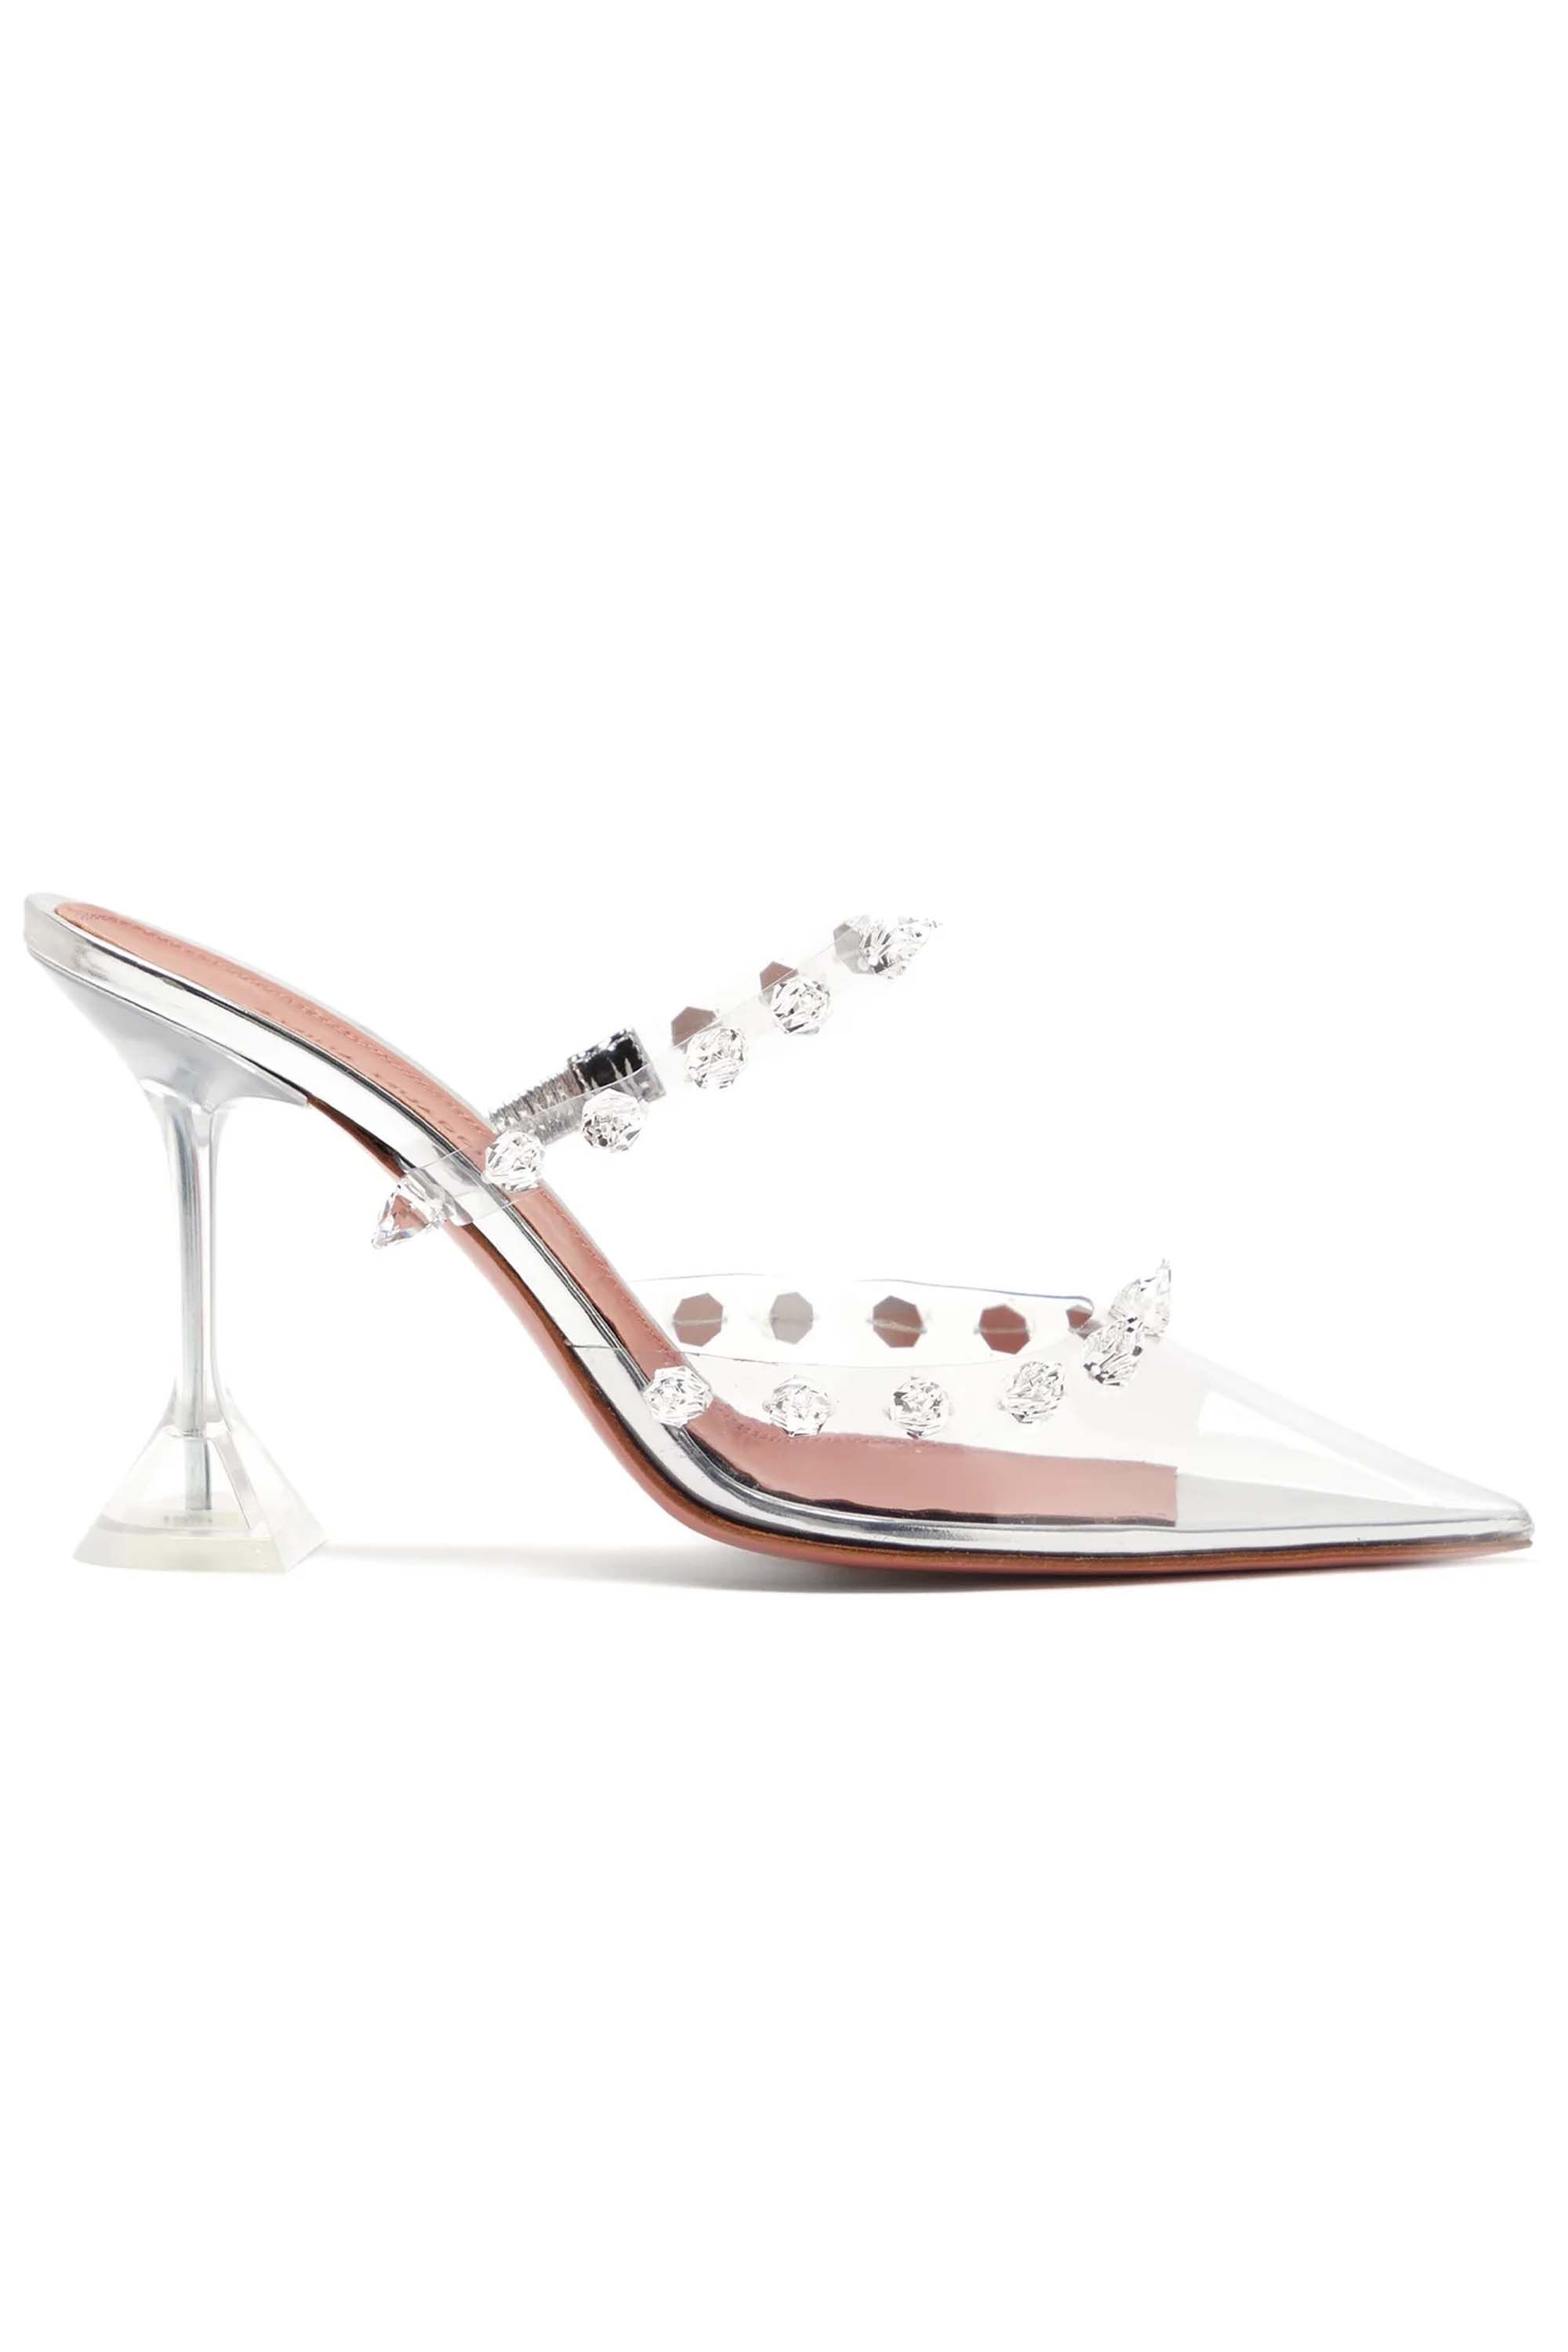 Buy > cinderella clear heels > in stock